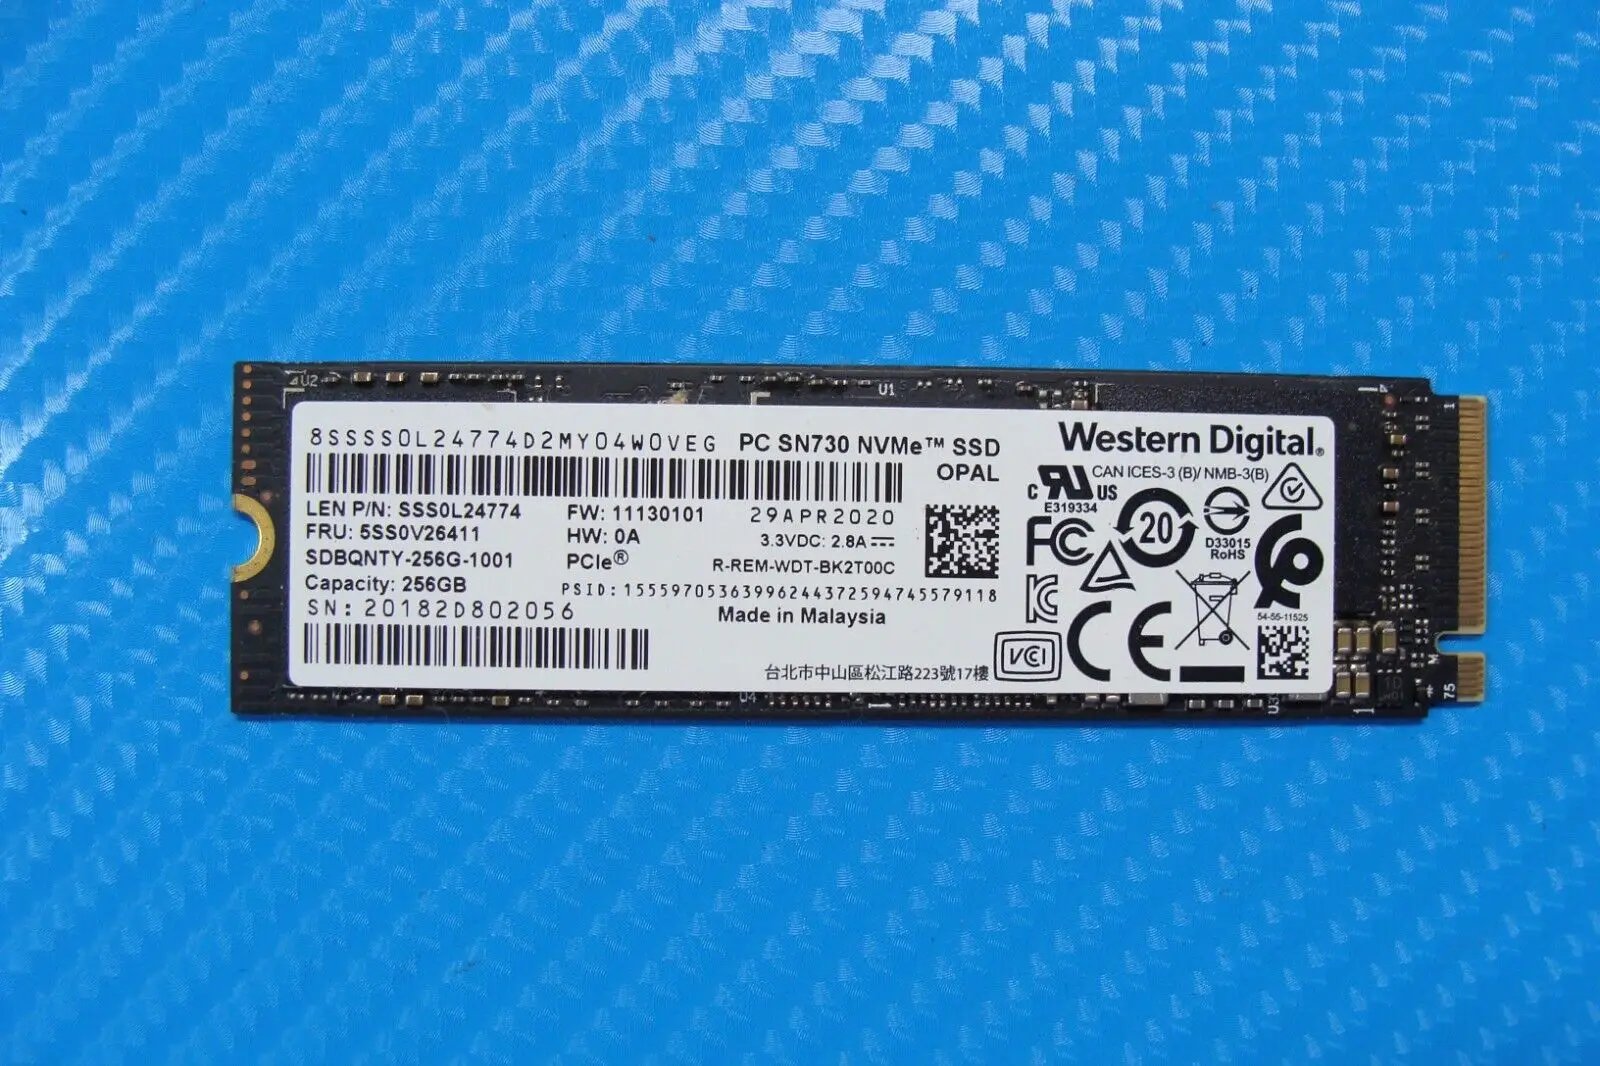 Lenovo X380 Yoga WD 256GB NVMe M.2 SSD Solid State Drive SDBQNTY-256G-1001